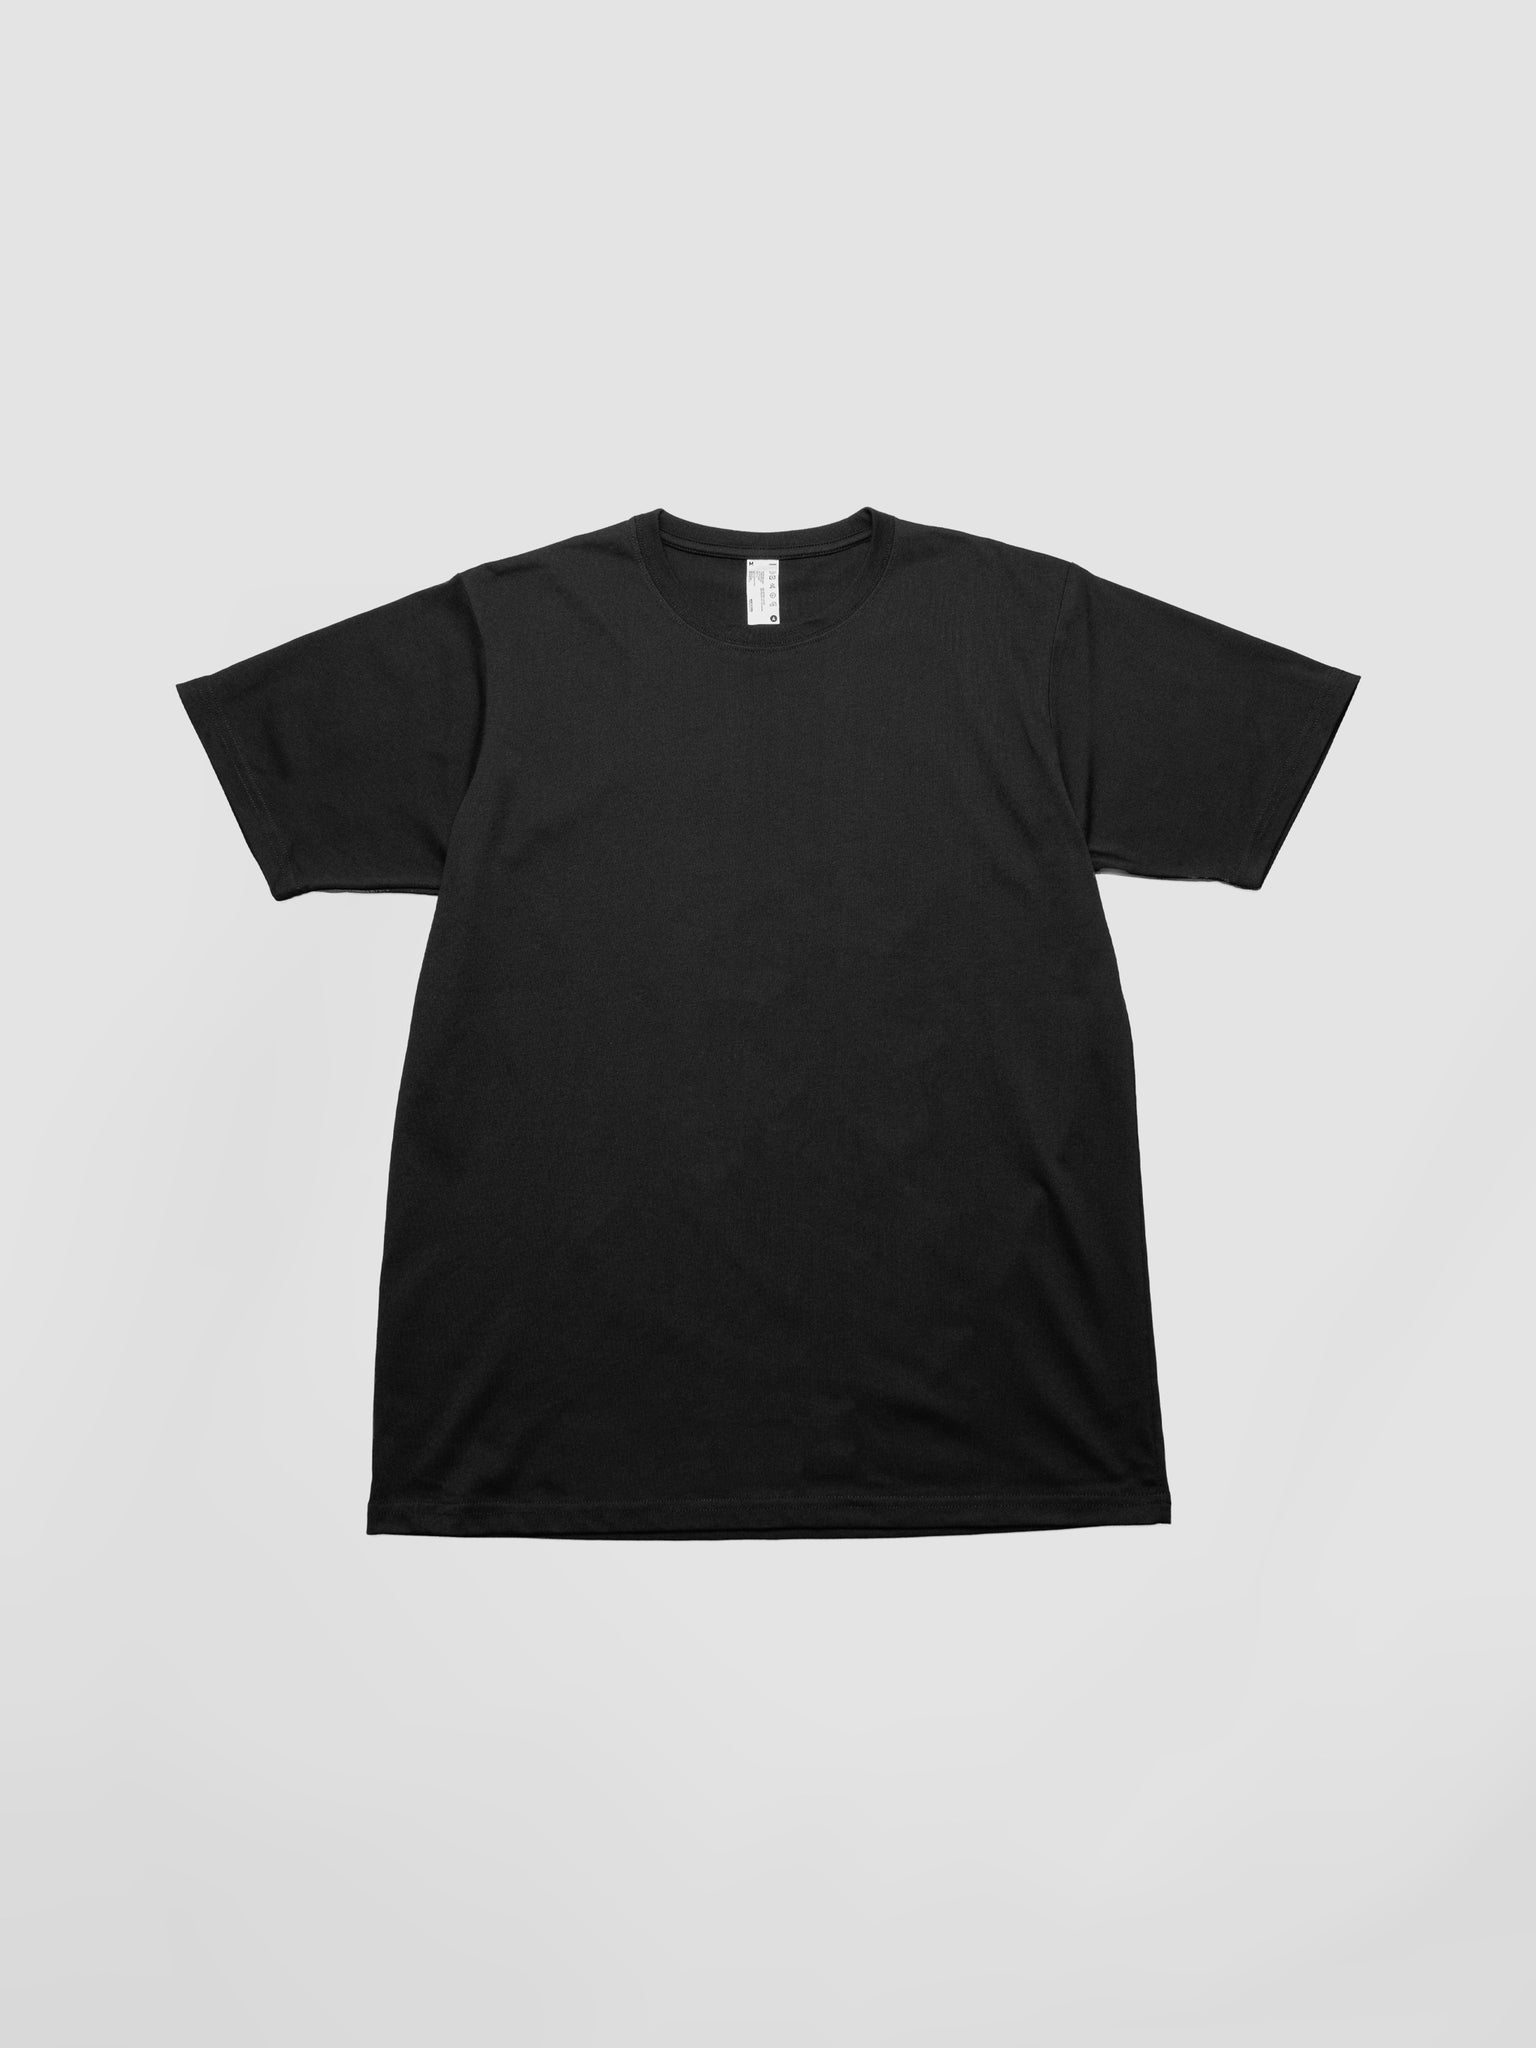 BLANK - Standard Fit T-Shirt Black - v2